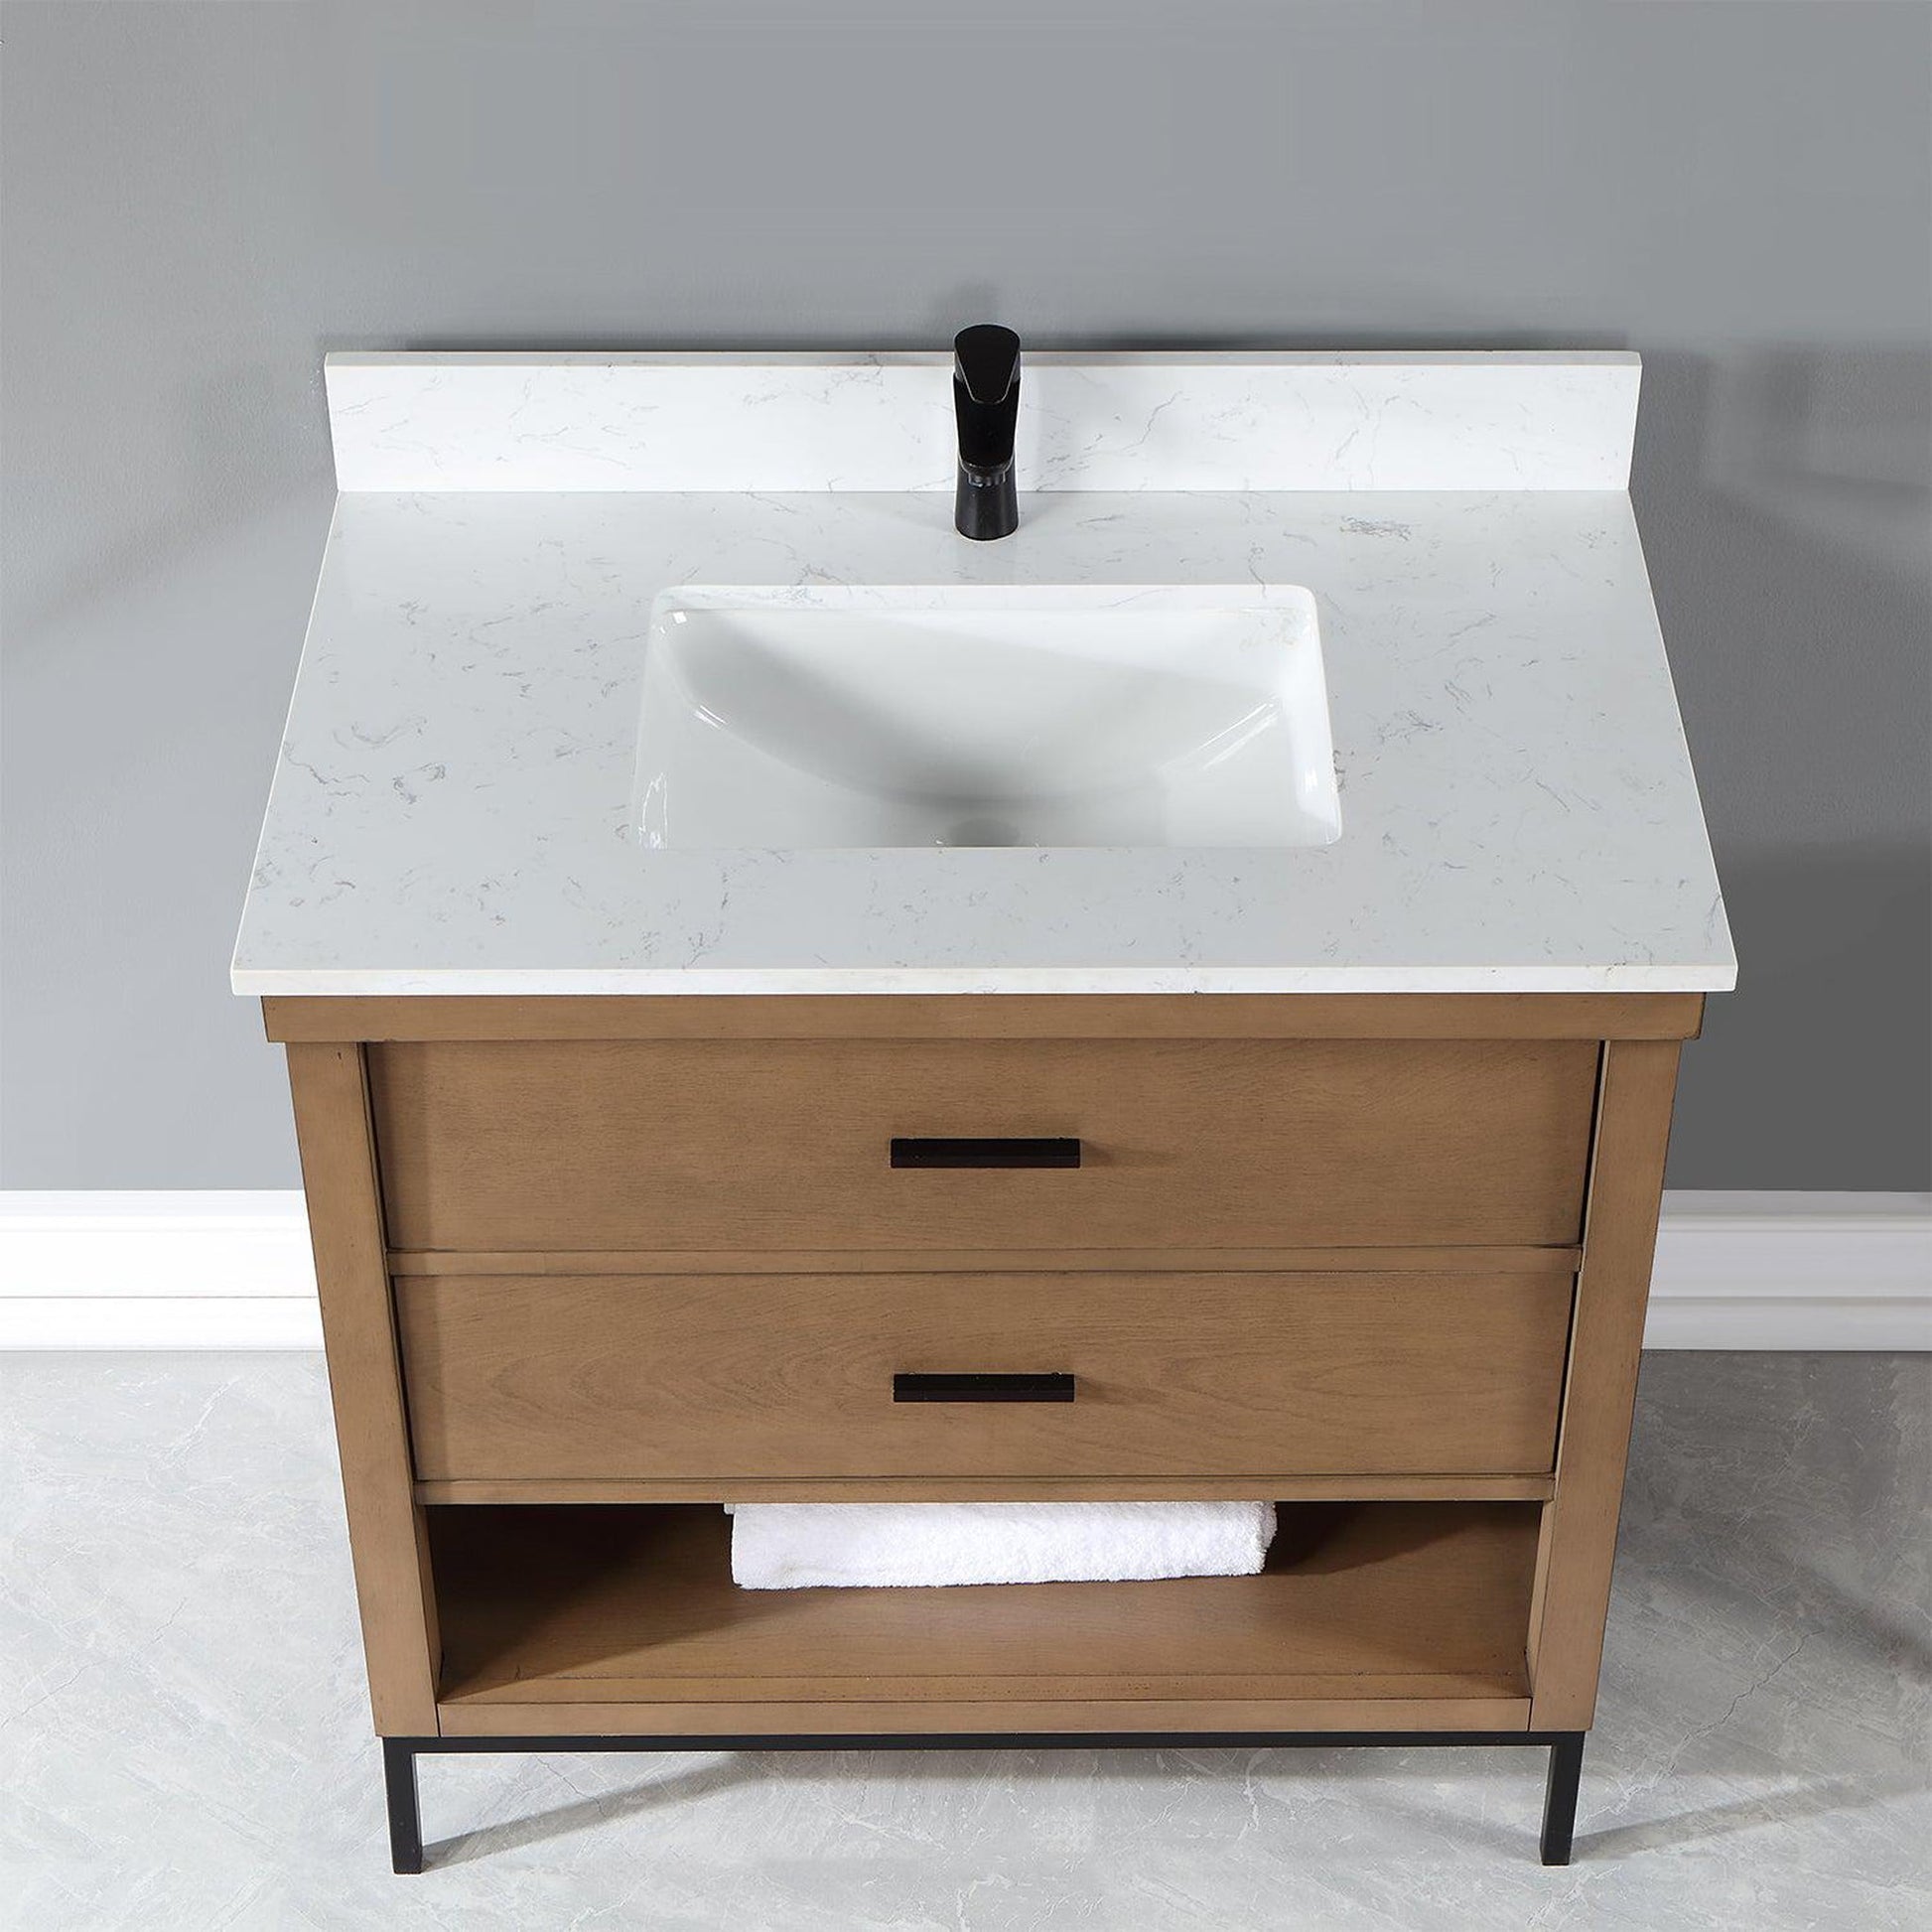 Altair Kesia 36" Brown Pine Freestanding Single Bathroom Vanity Set With Stylish Aosta White Composite Stone Top, Rectangular Undermount Ceramic Sink, Overflow, and Backsplash